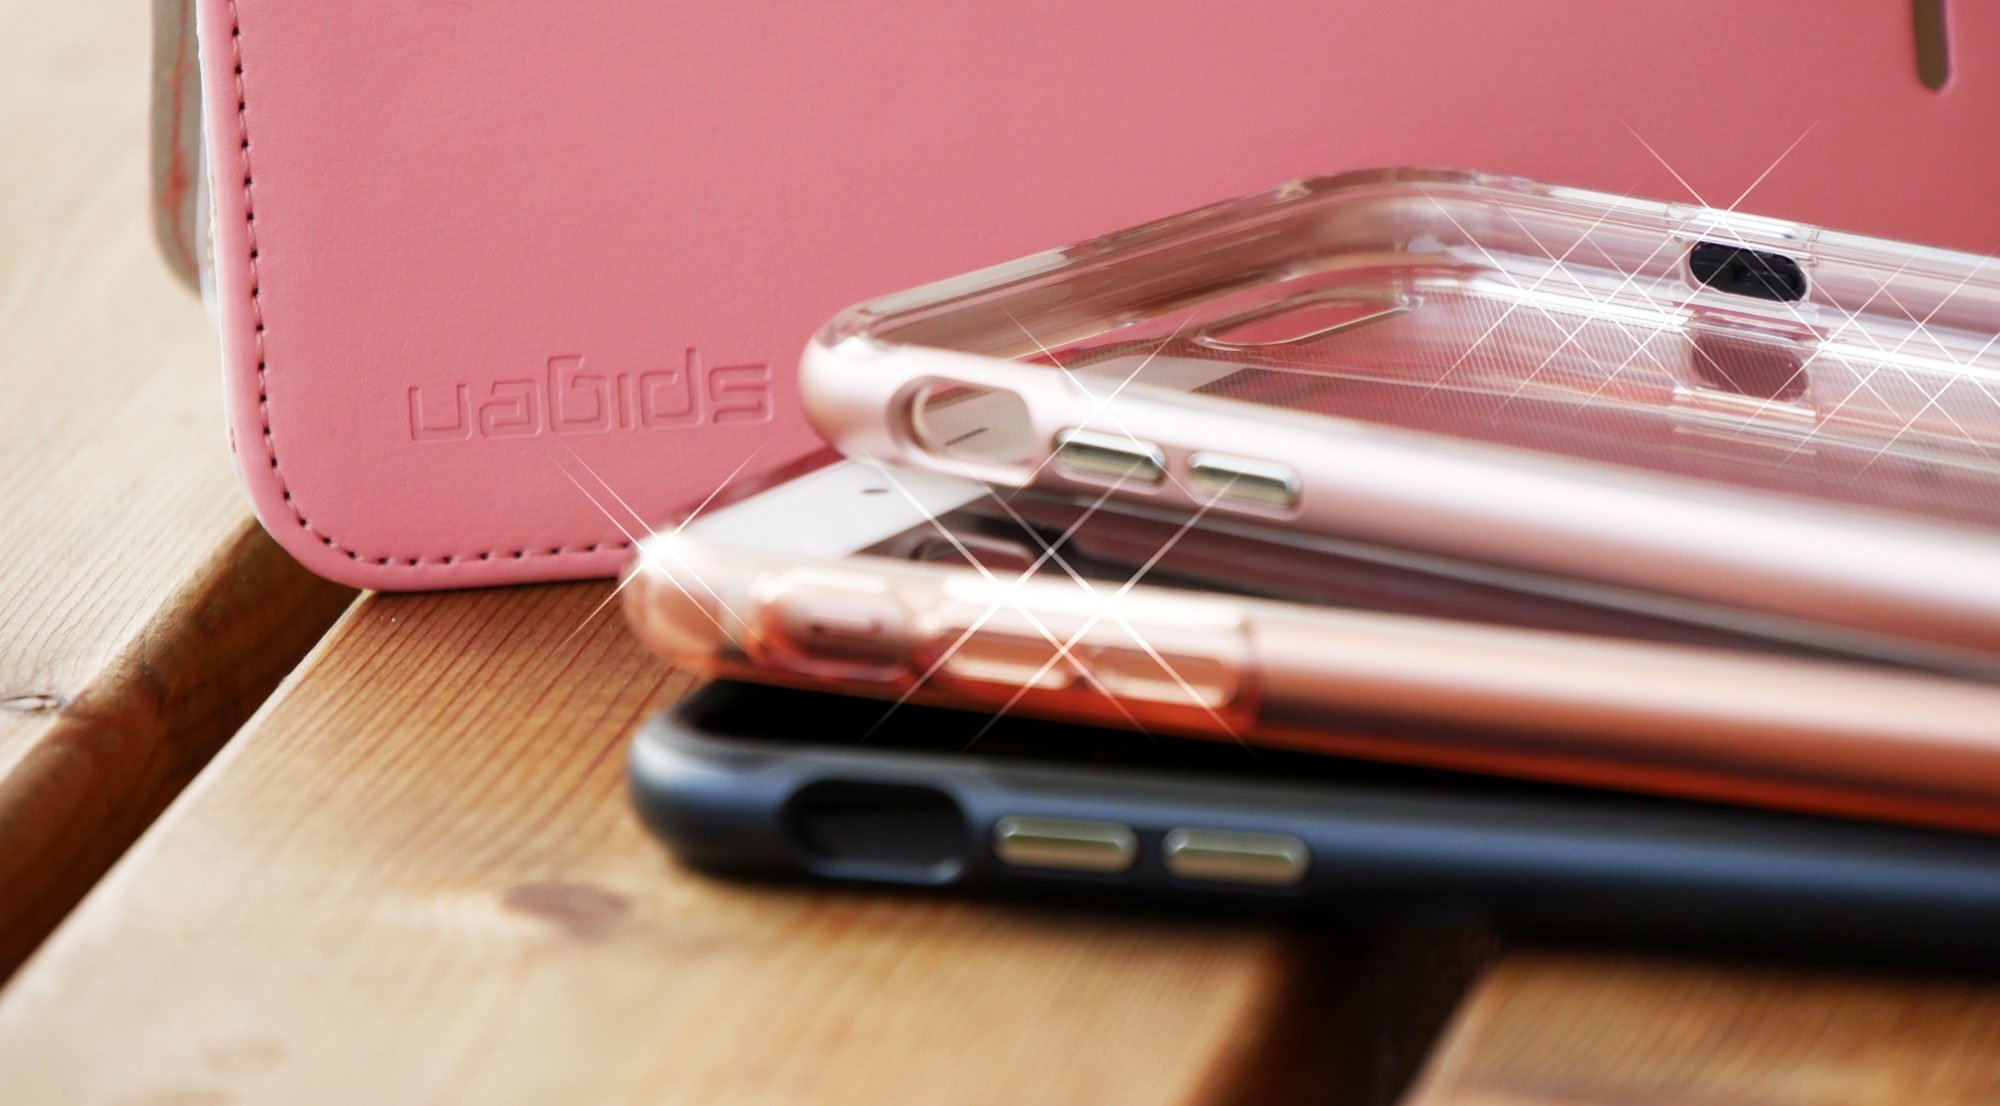 iPhone 6s Hüllen-Test: die besten Cases & Schutzhüllen fürs iPhone 6s & iPhone 6s Plus 1